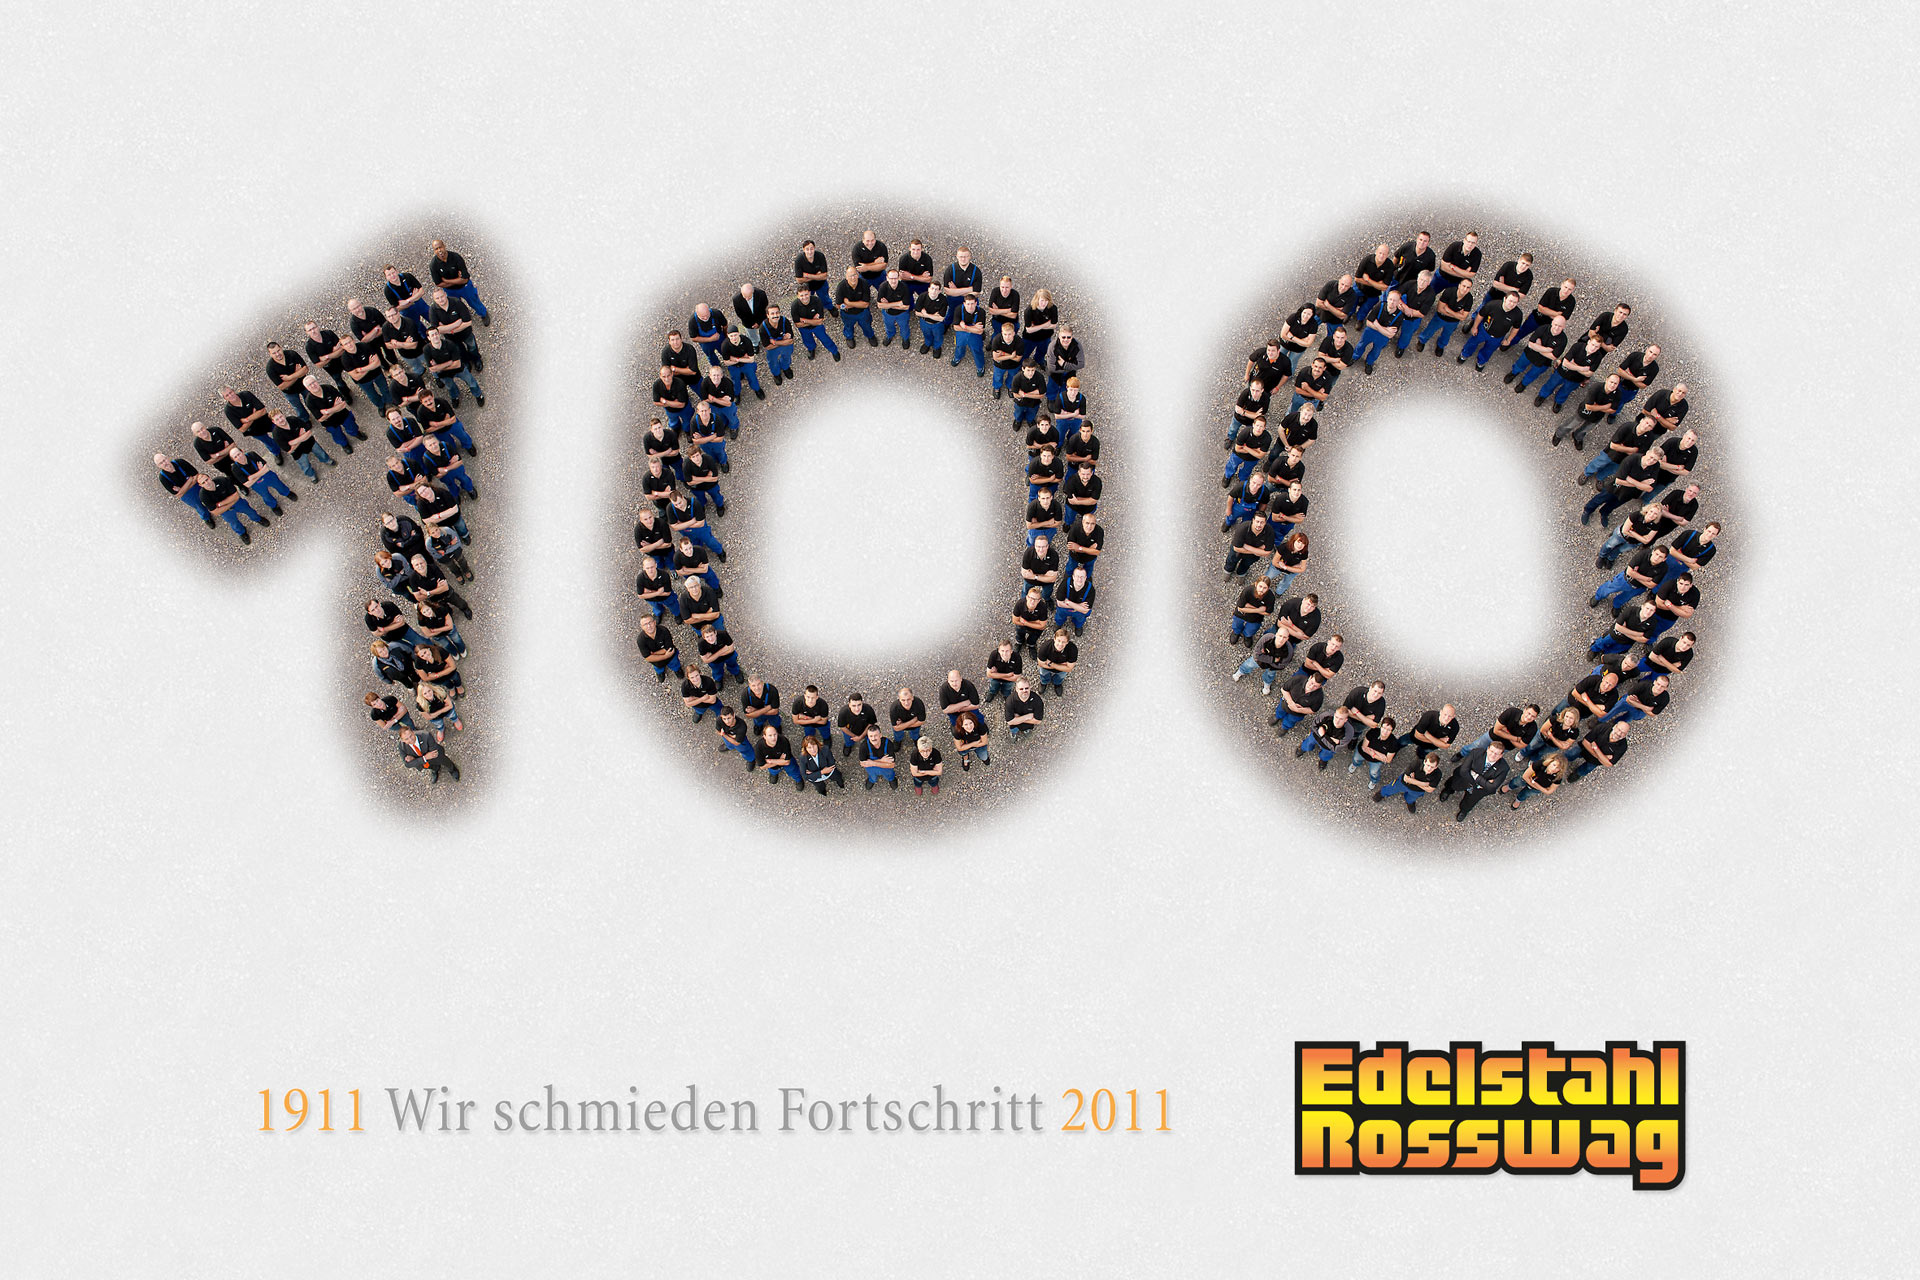 2011: 100 year anniversary at Edelstahl Rosswag